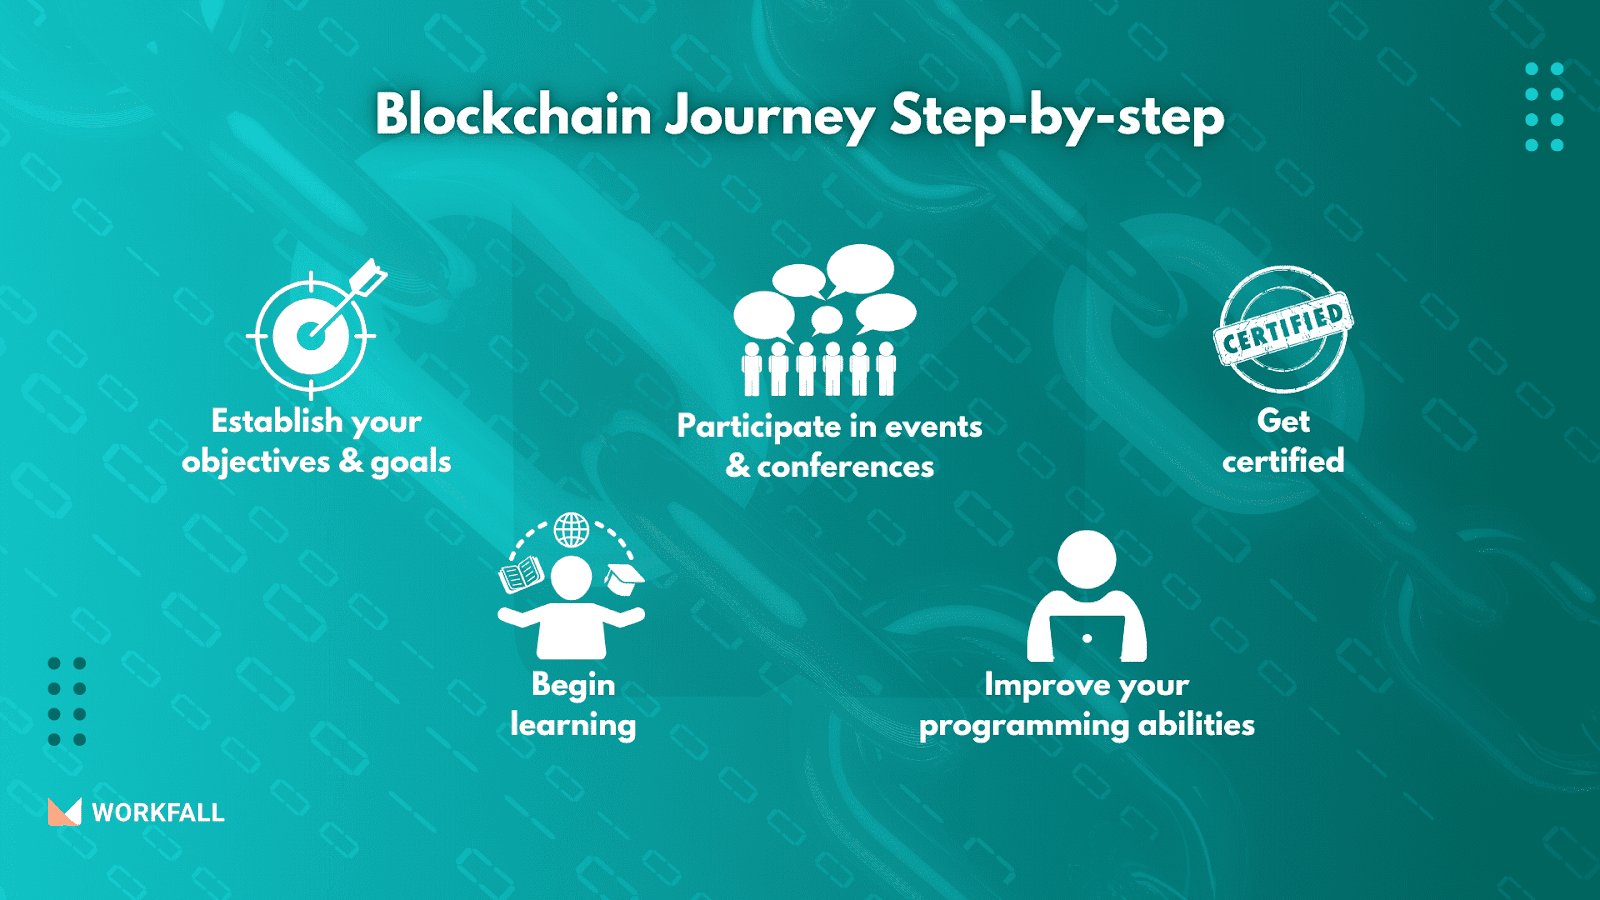 Blockchain Journey, Step-by-step